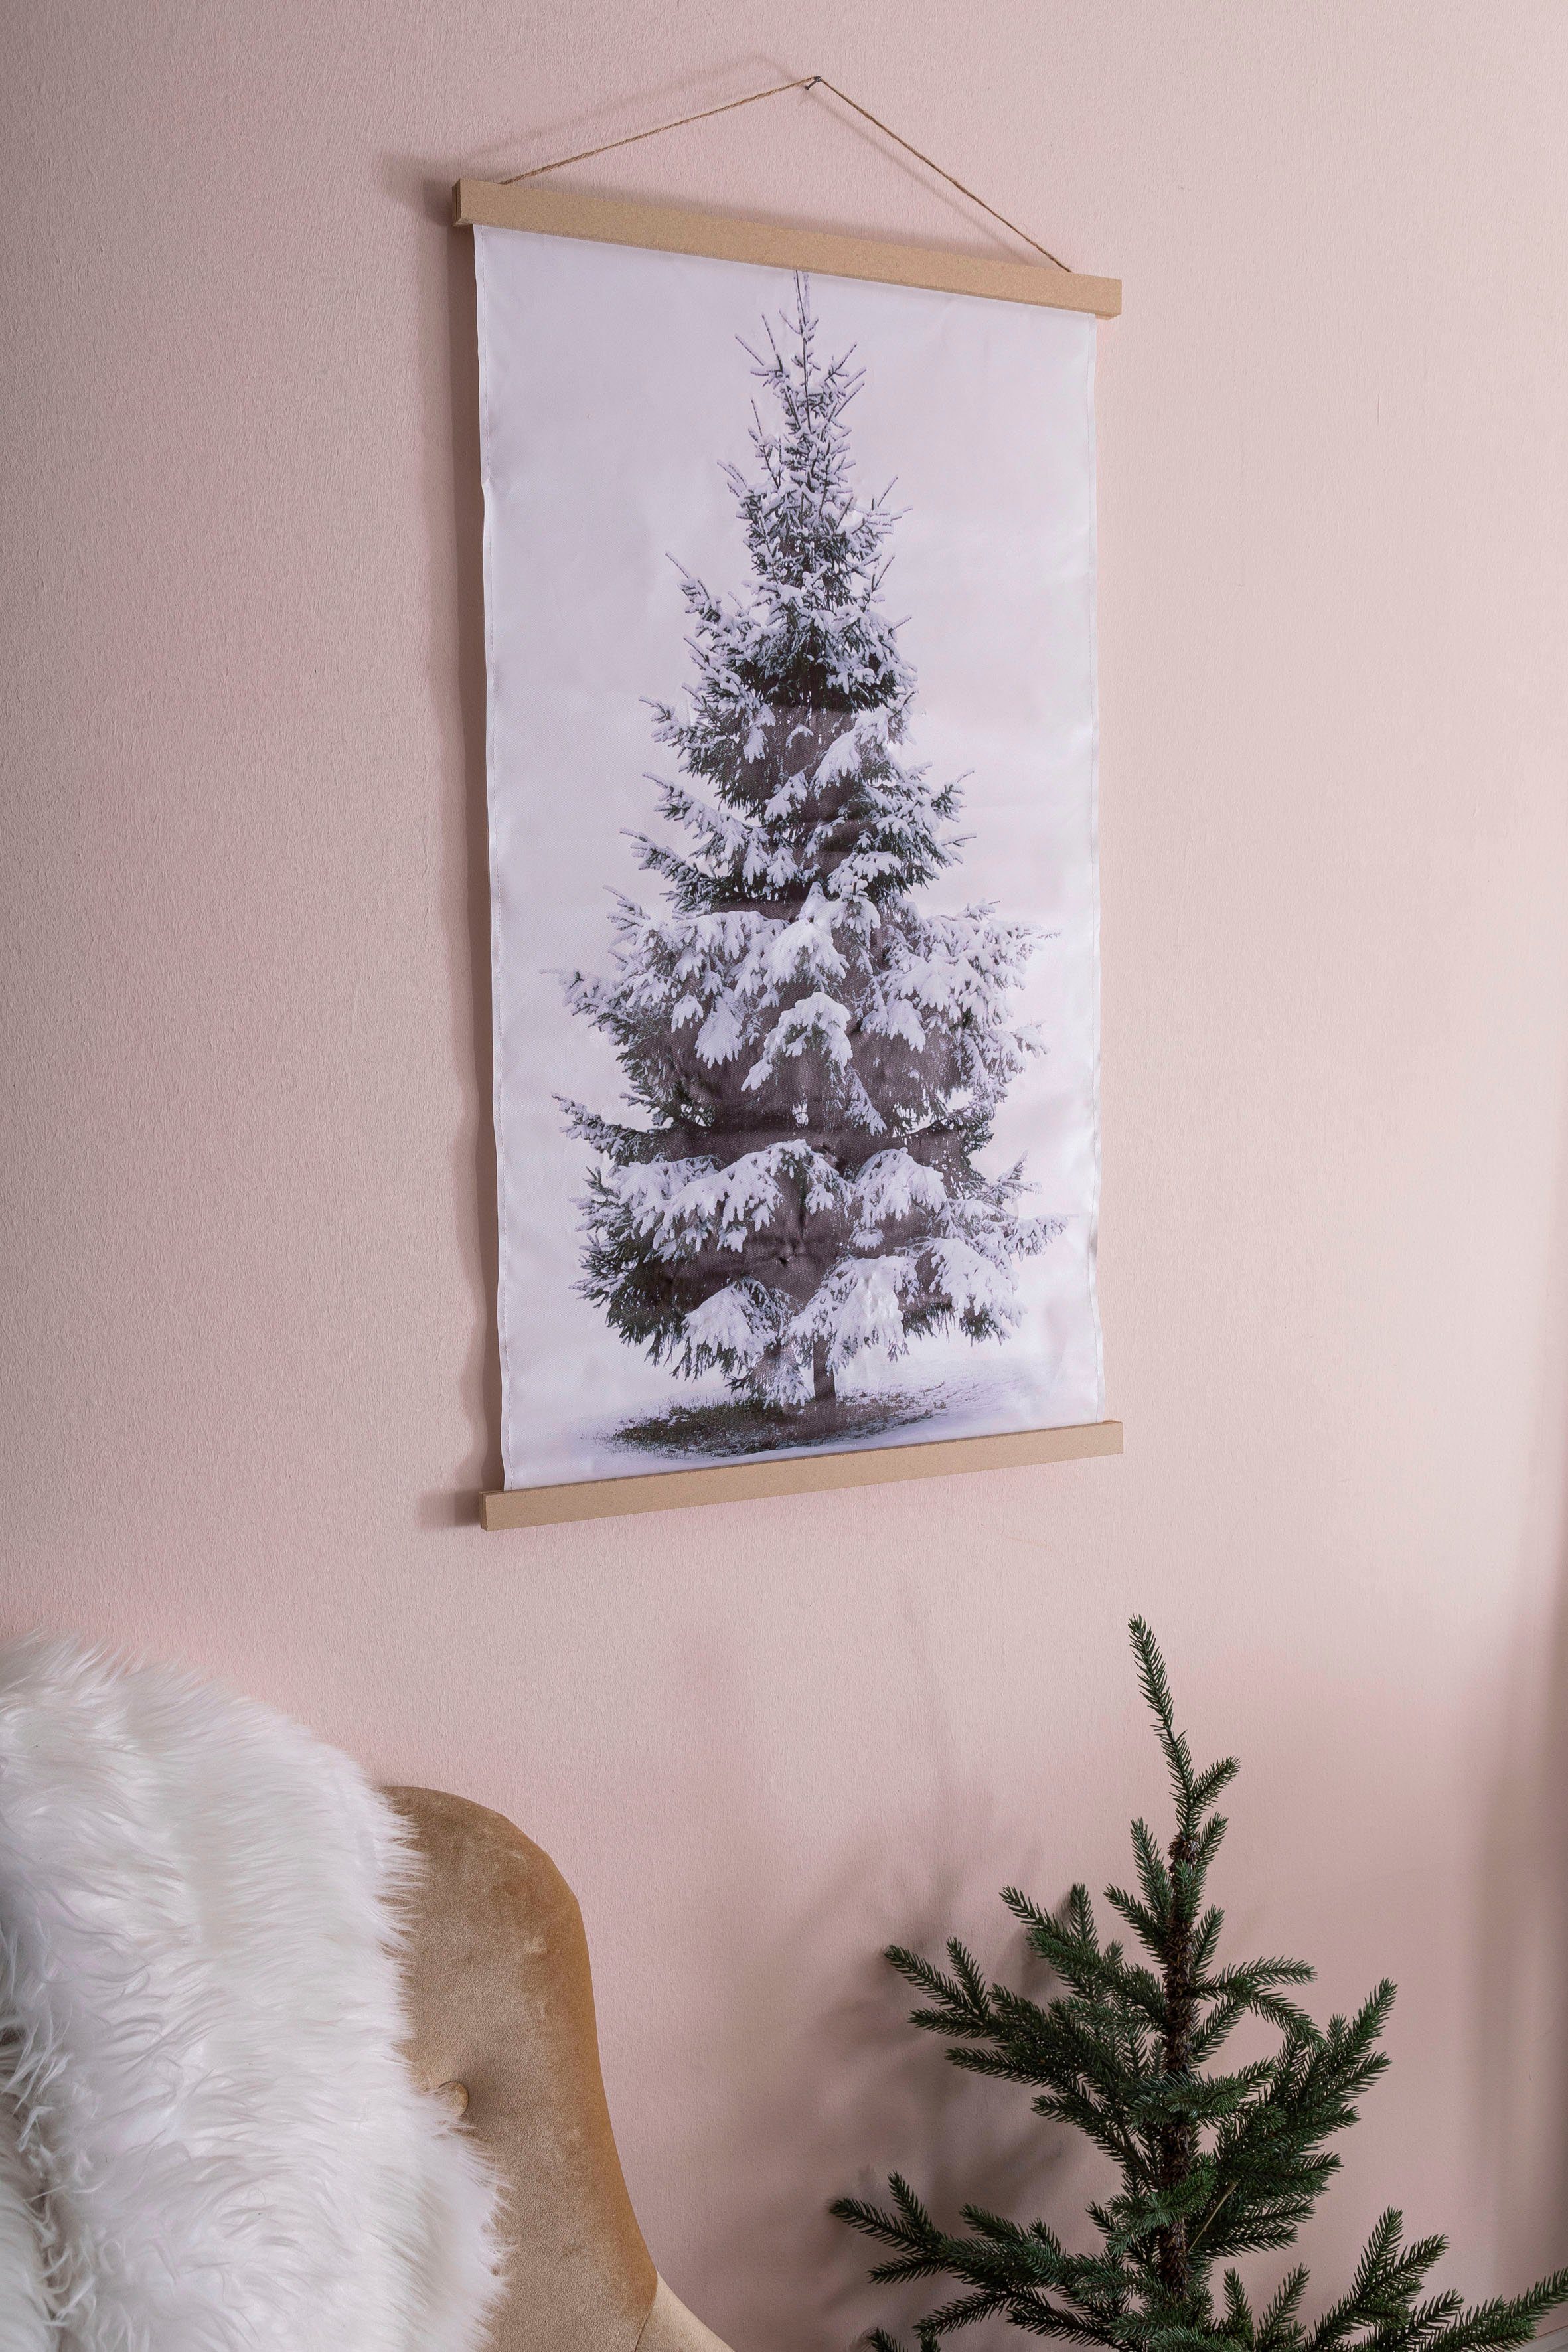 Myflair Möbel & LED-Bild Wandbehang 92 (1 LED-Beleuchtung, Höhe St), Aufhängen, Batteriebetrieb Weihnachtsdeko, LED-Leinwand Tannenbaum, zum Accessoires ca. mit cm